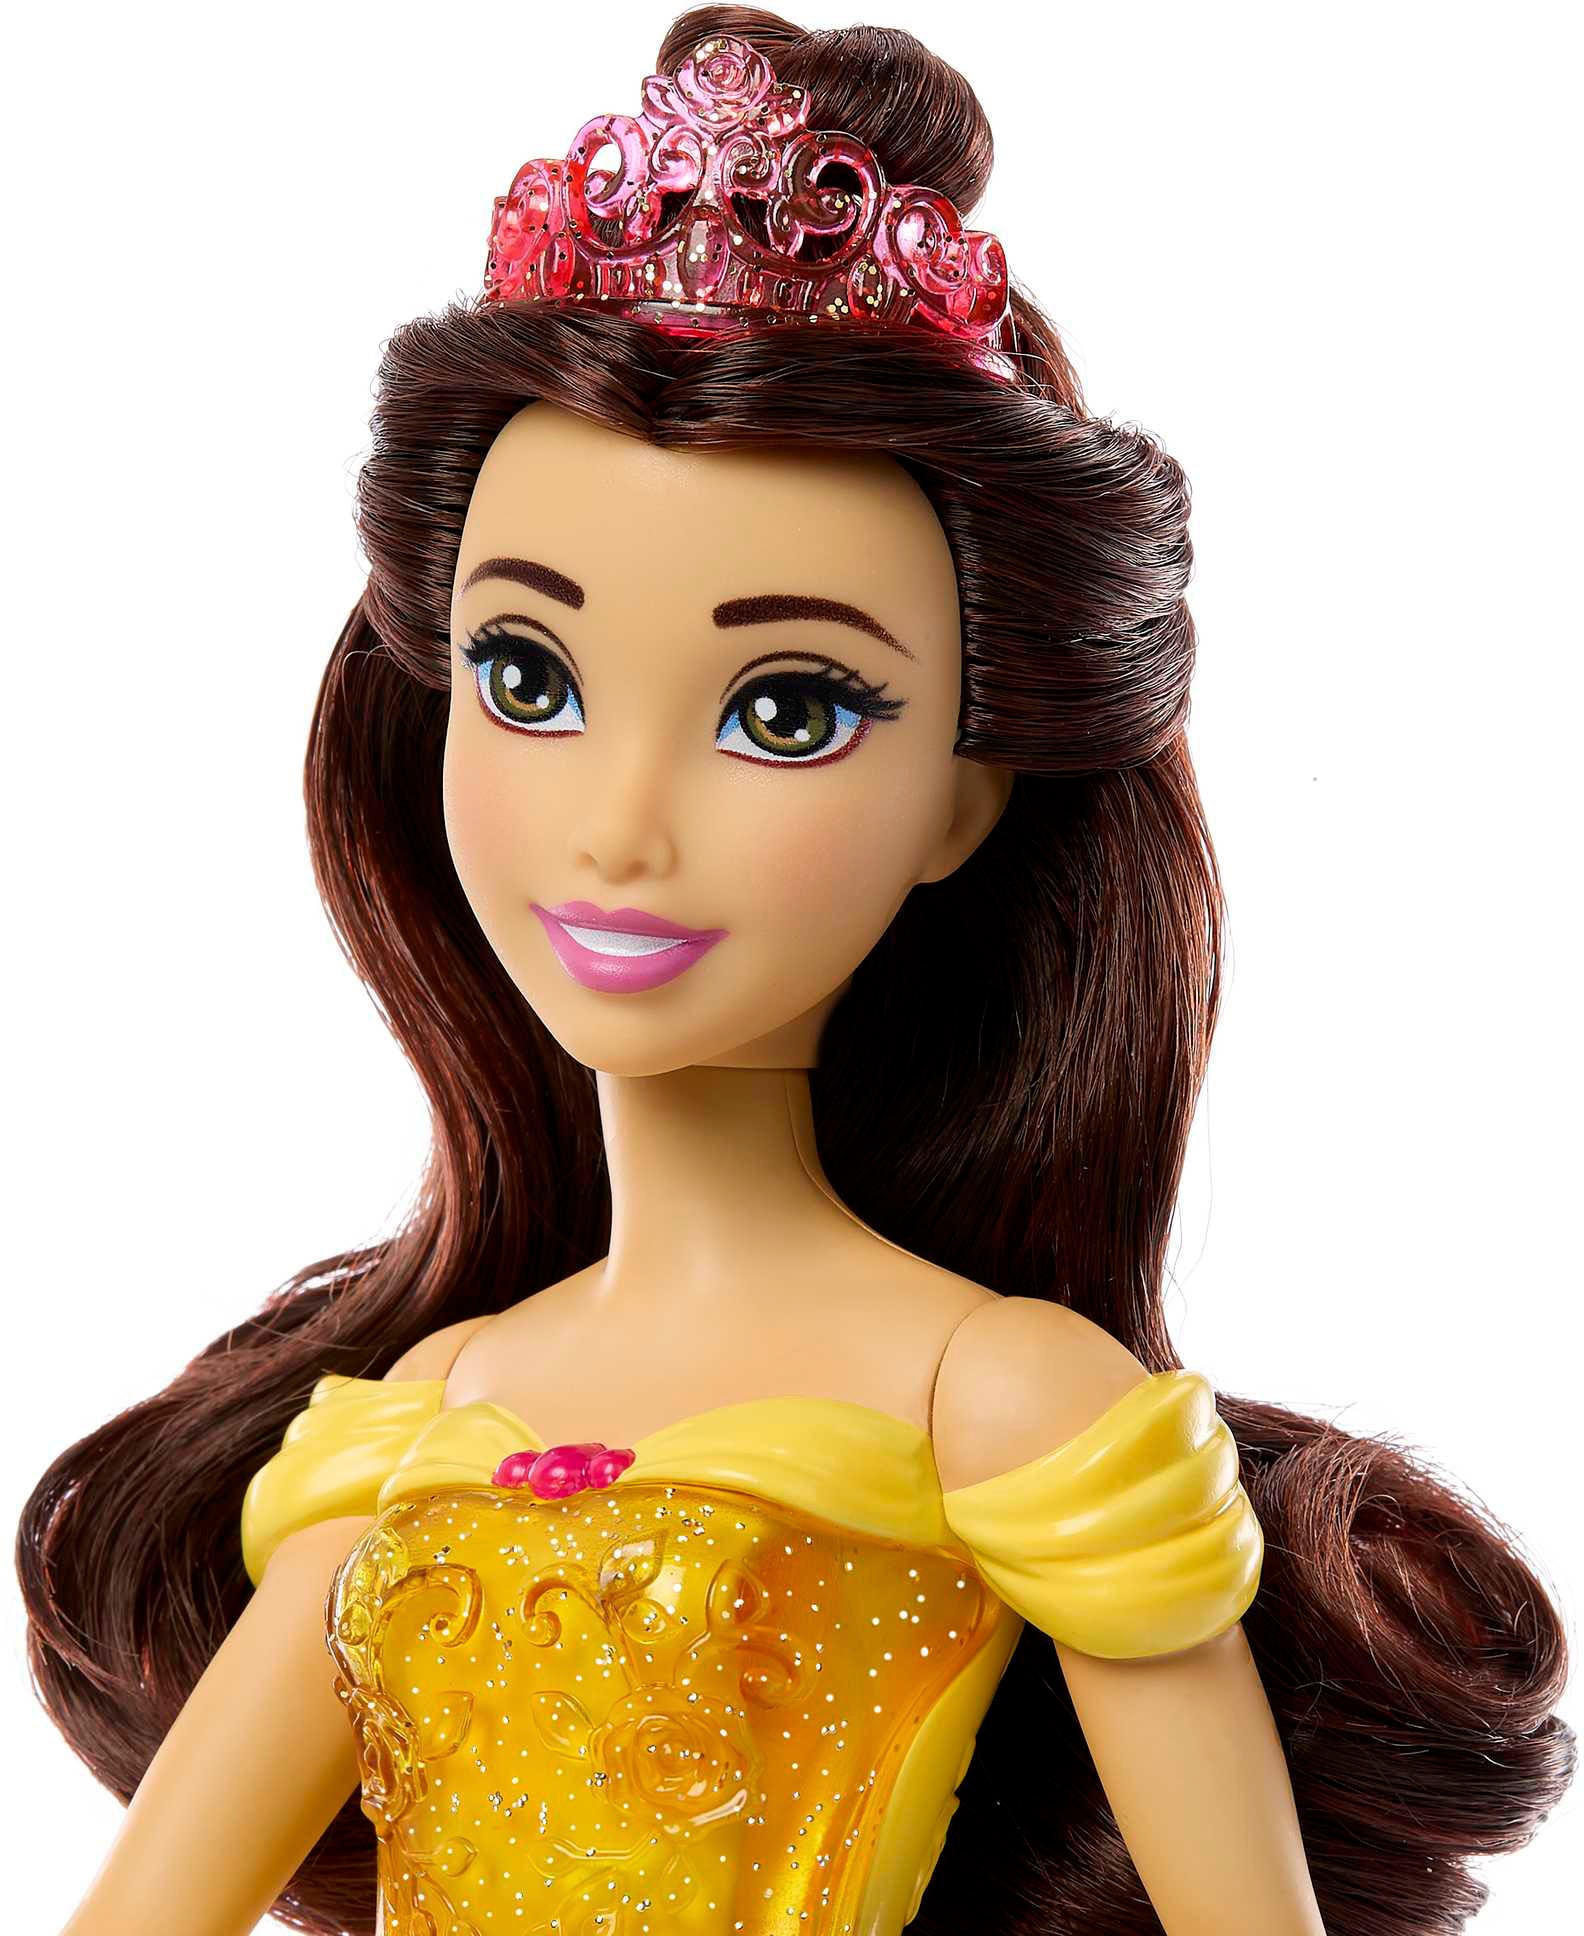 Mattel® Anziehpuppe »Disney Prinzessin, Belle«